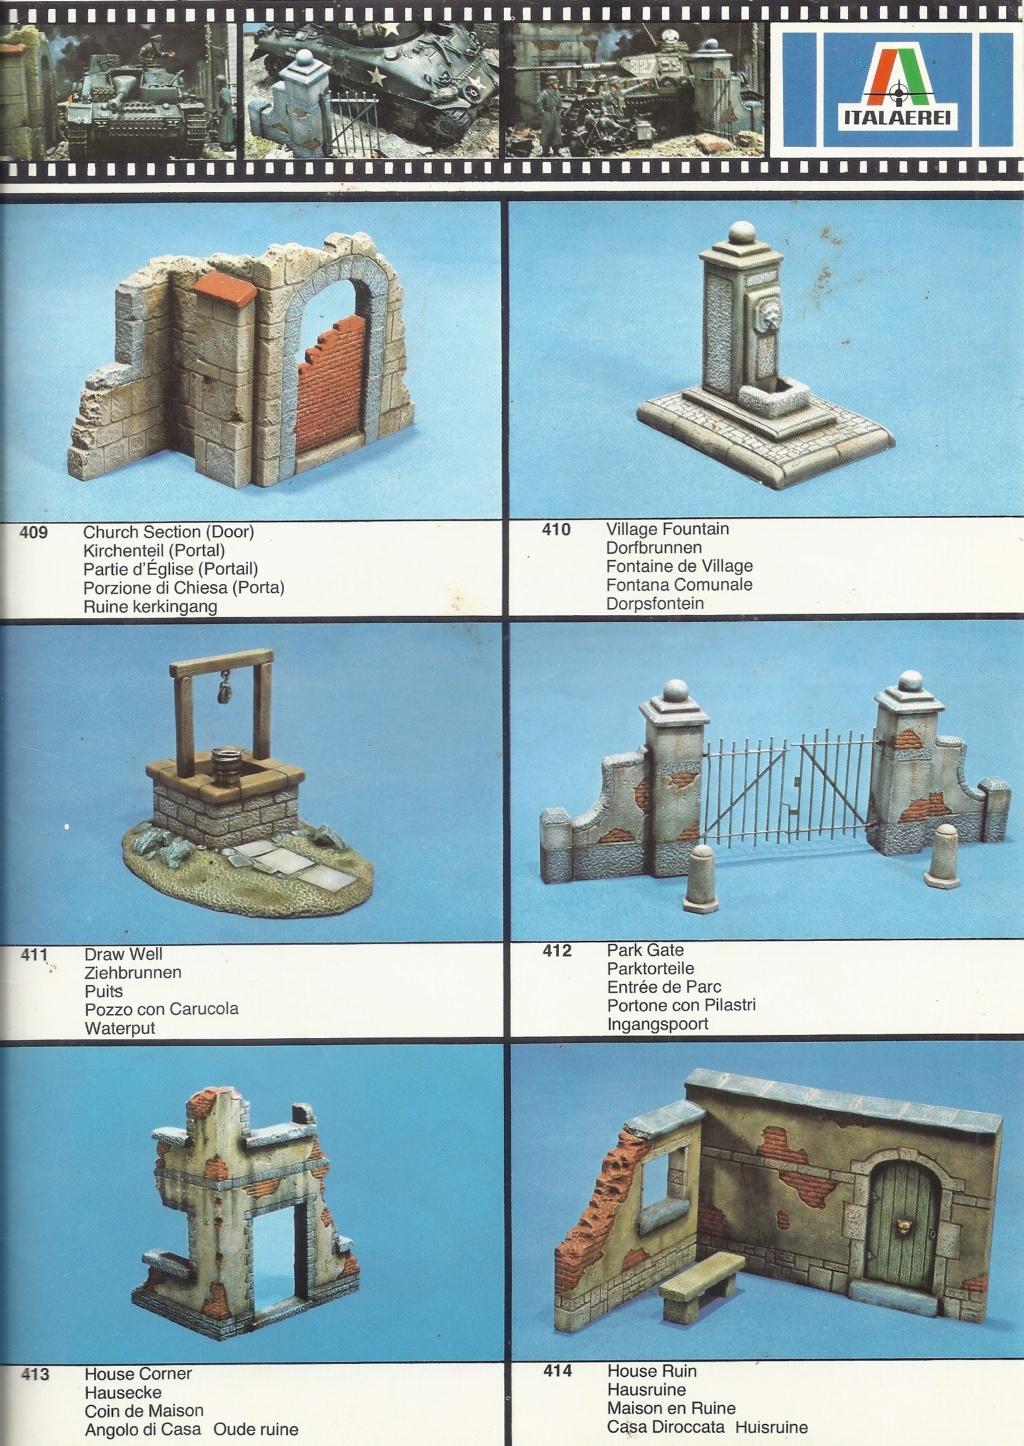 [ITALAEREI 1979] Catalogue 1979  Italae39